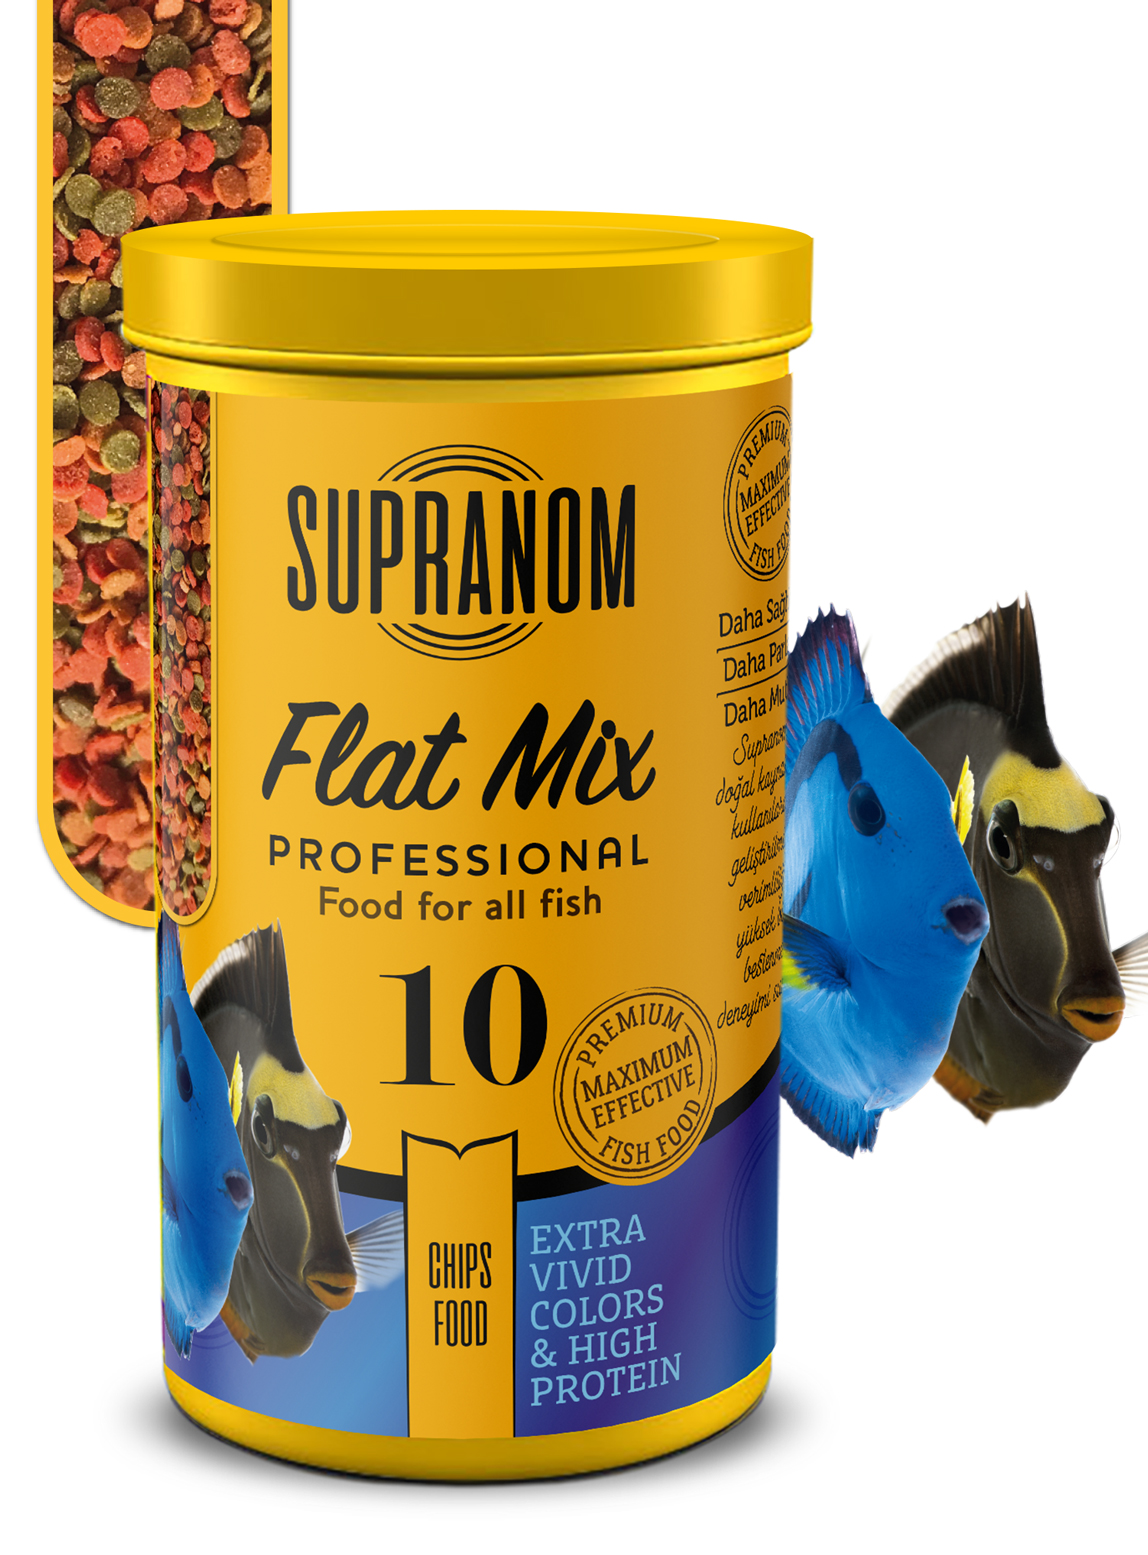 Supranom tatlı ve tuzlu su balık yemi flat mix chips food 250ml (10)-1